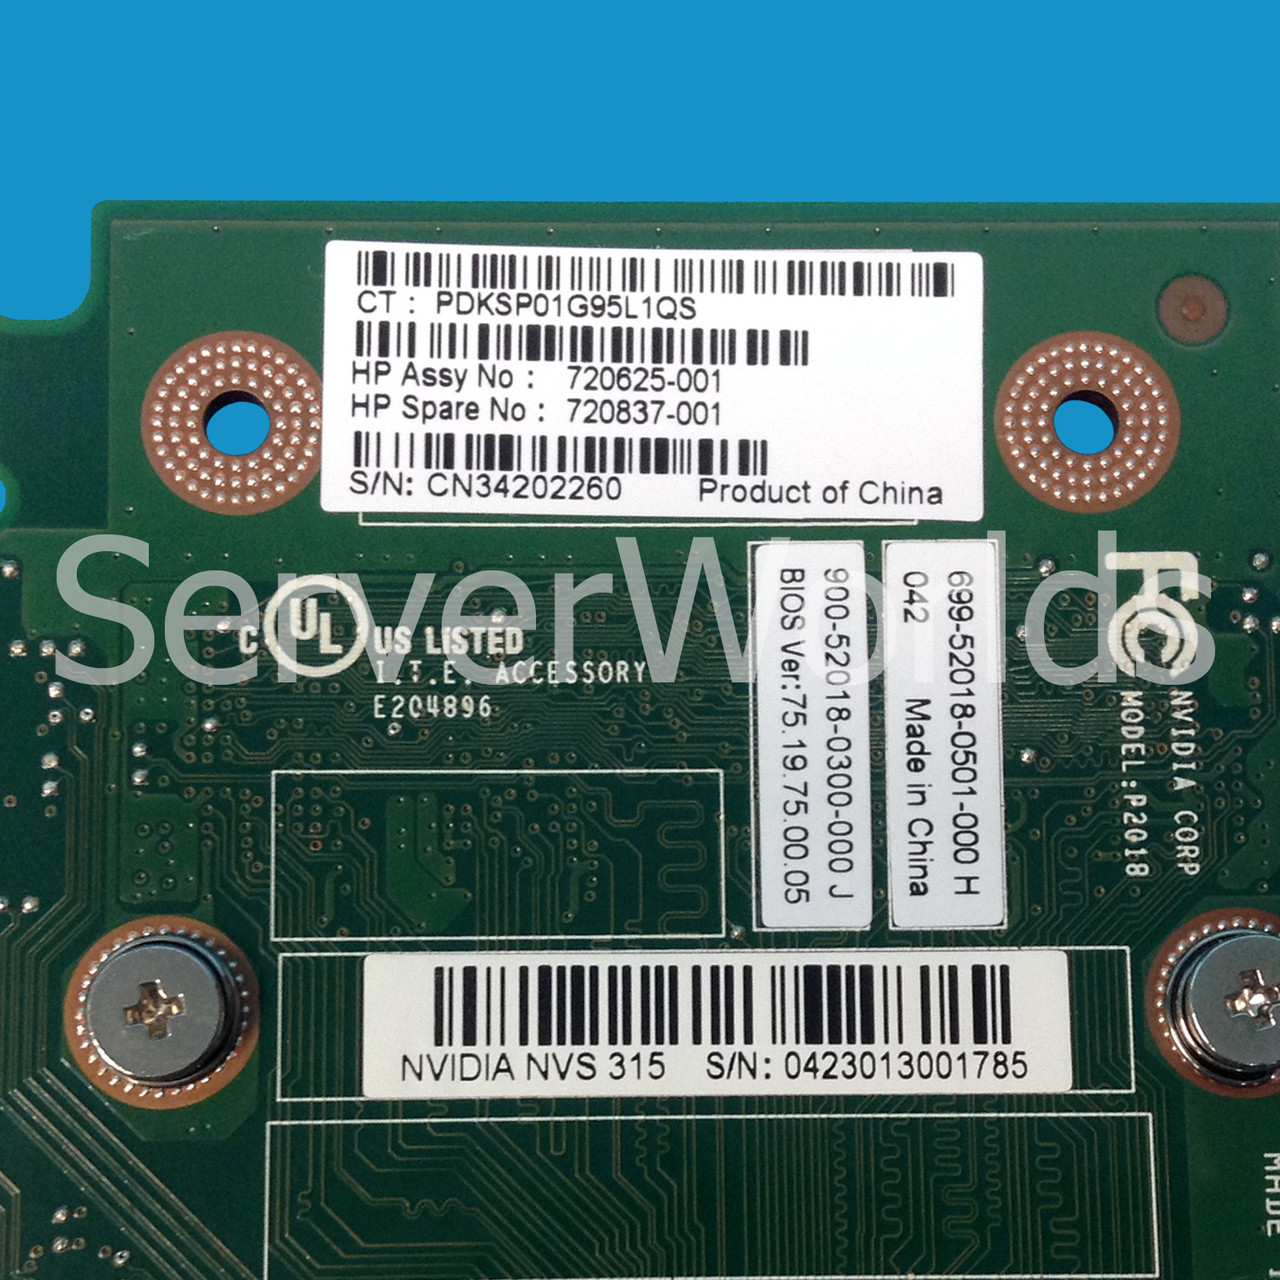 HP 720837-001 NVS 315 PCIe Video Card 1GB Cache 720625-001, E1C65AT